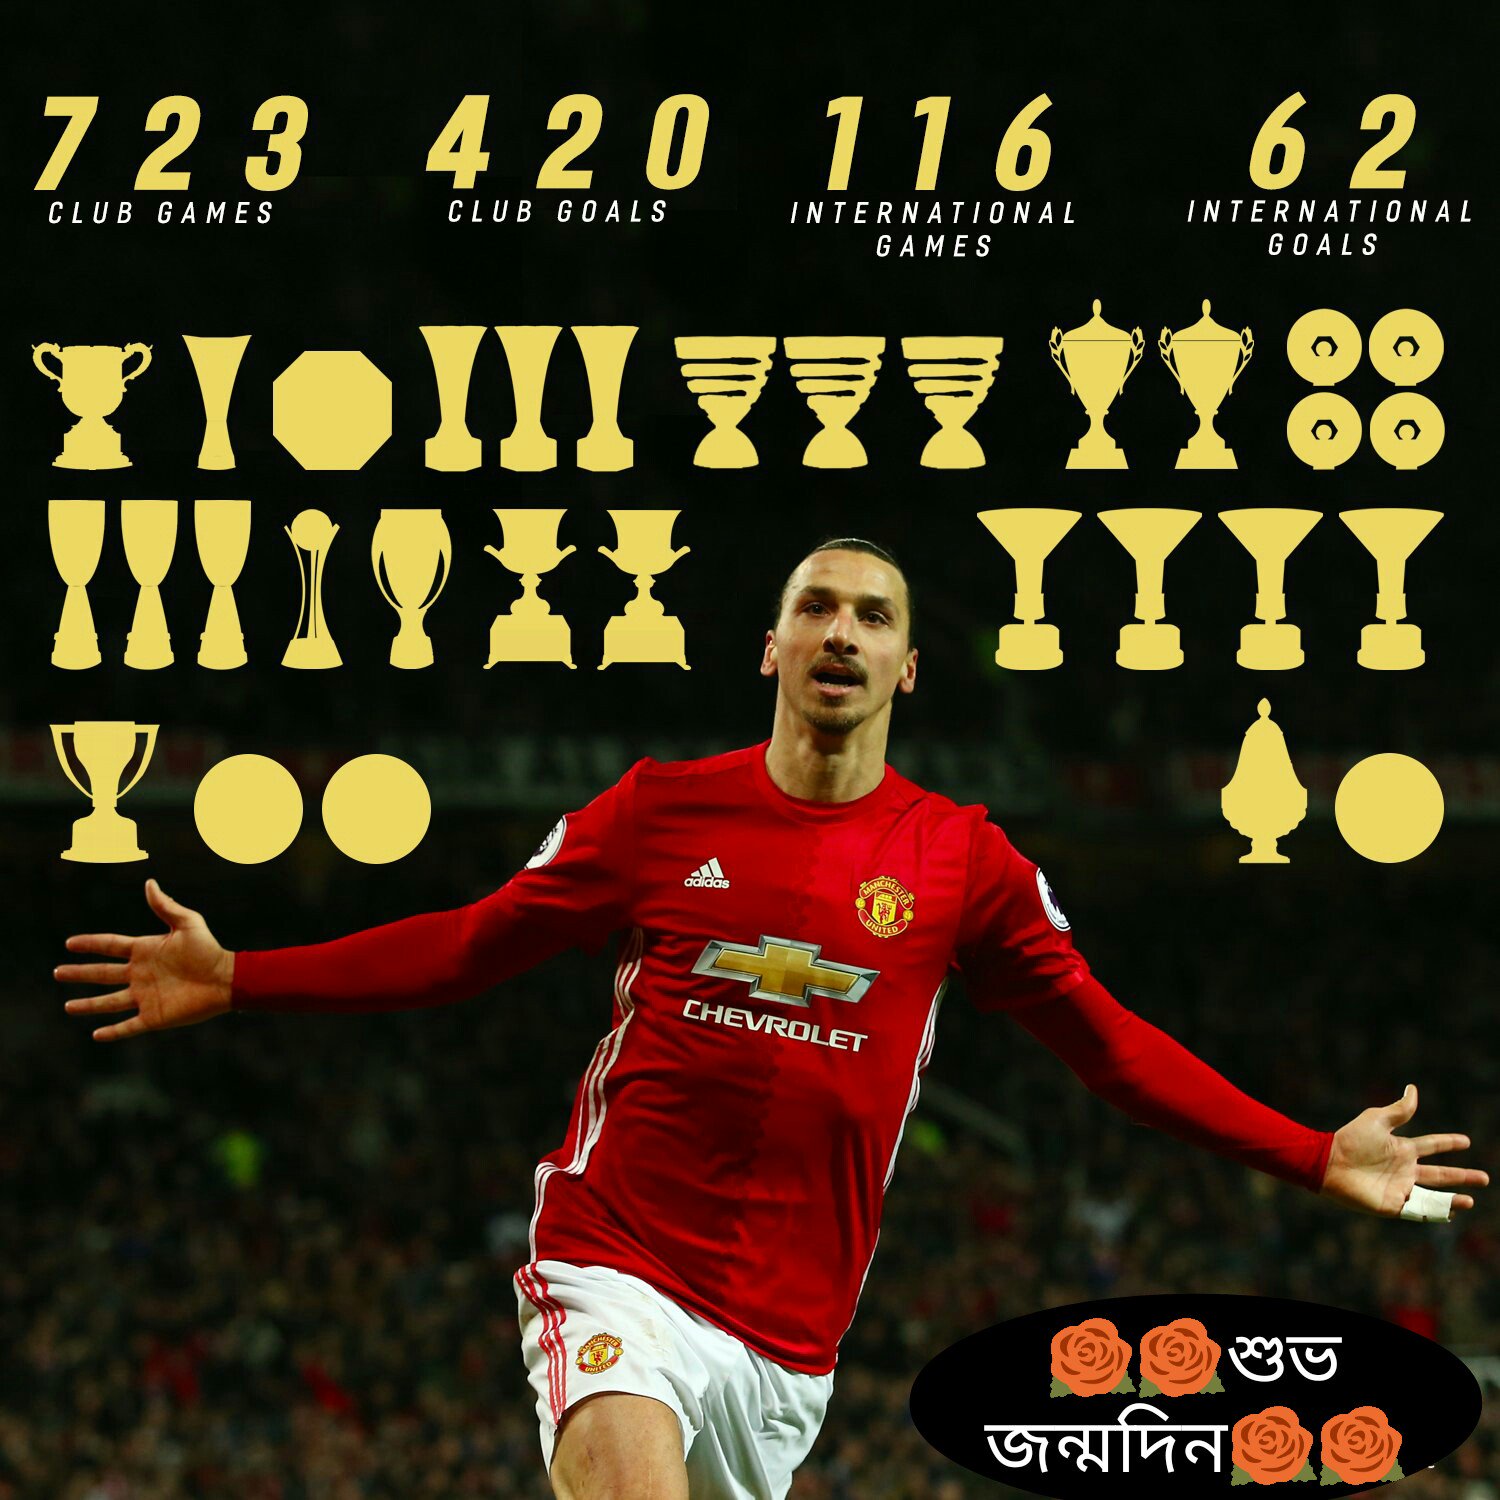 Happy 36th birthday to
Zlatan Ibrahimovic. 

723 games 420 goals 116 caps  31 trophies 